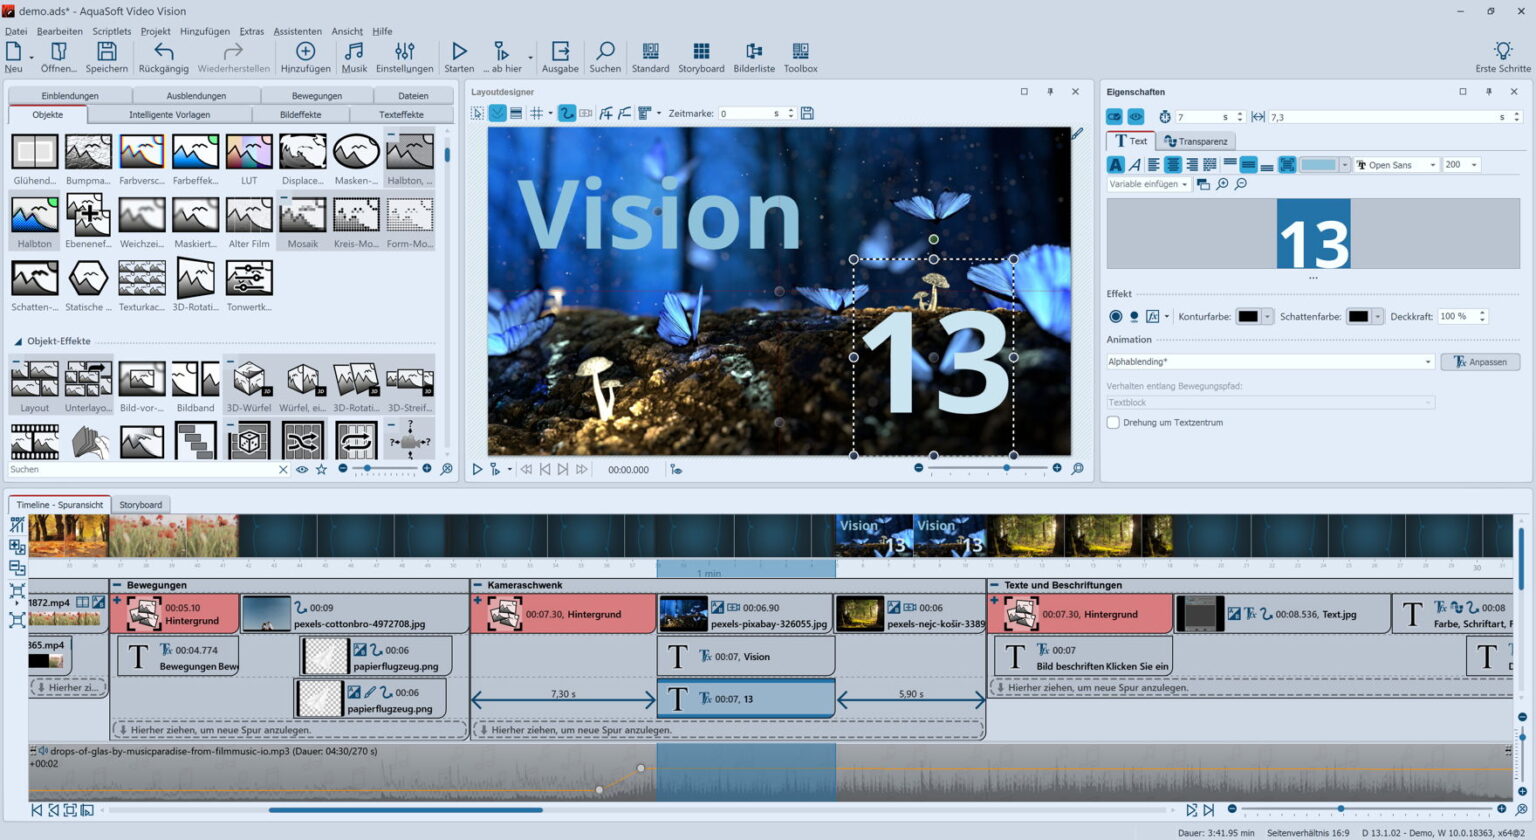 AquaSoft Video Vision 14.2.11 download the new version